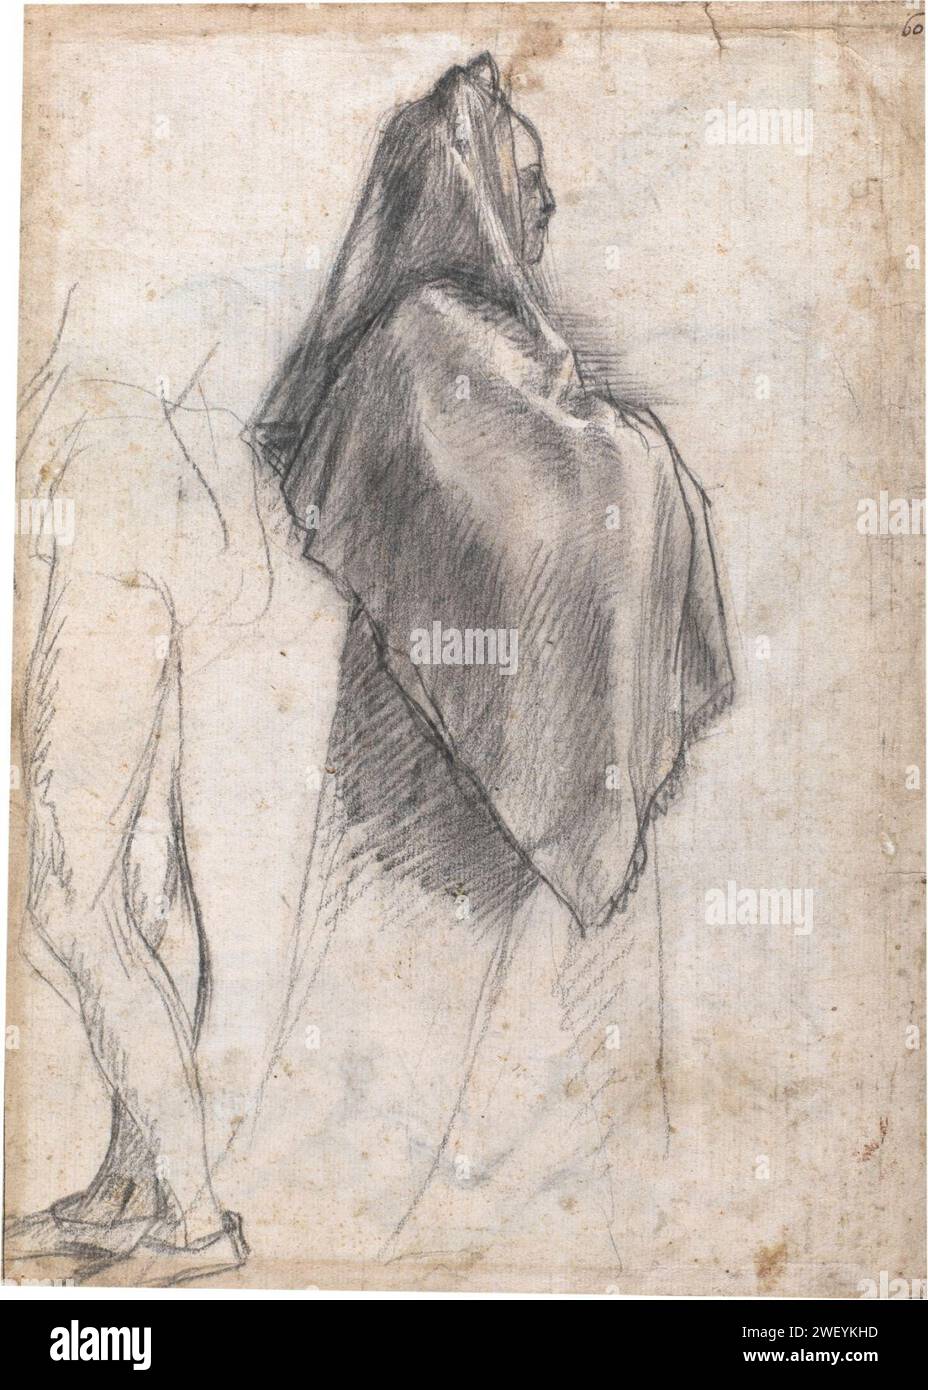 Andrea del Sarto - Estudio para una figura femenina, Hacia 1523, D001545. Stock Photo